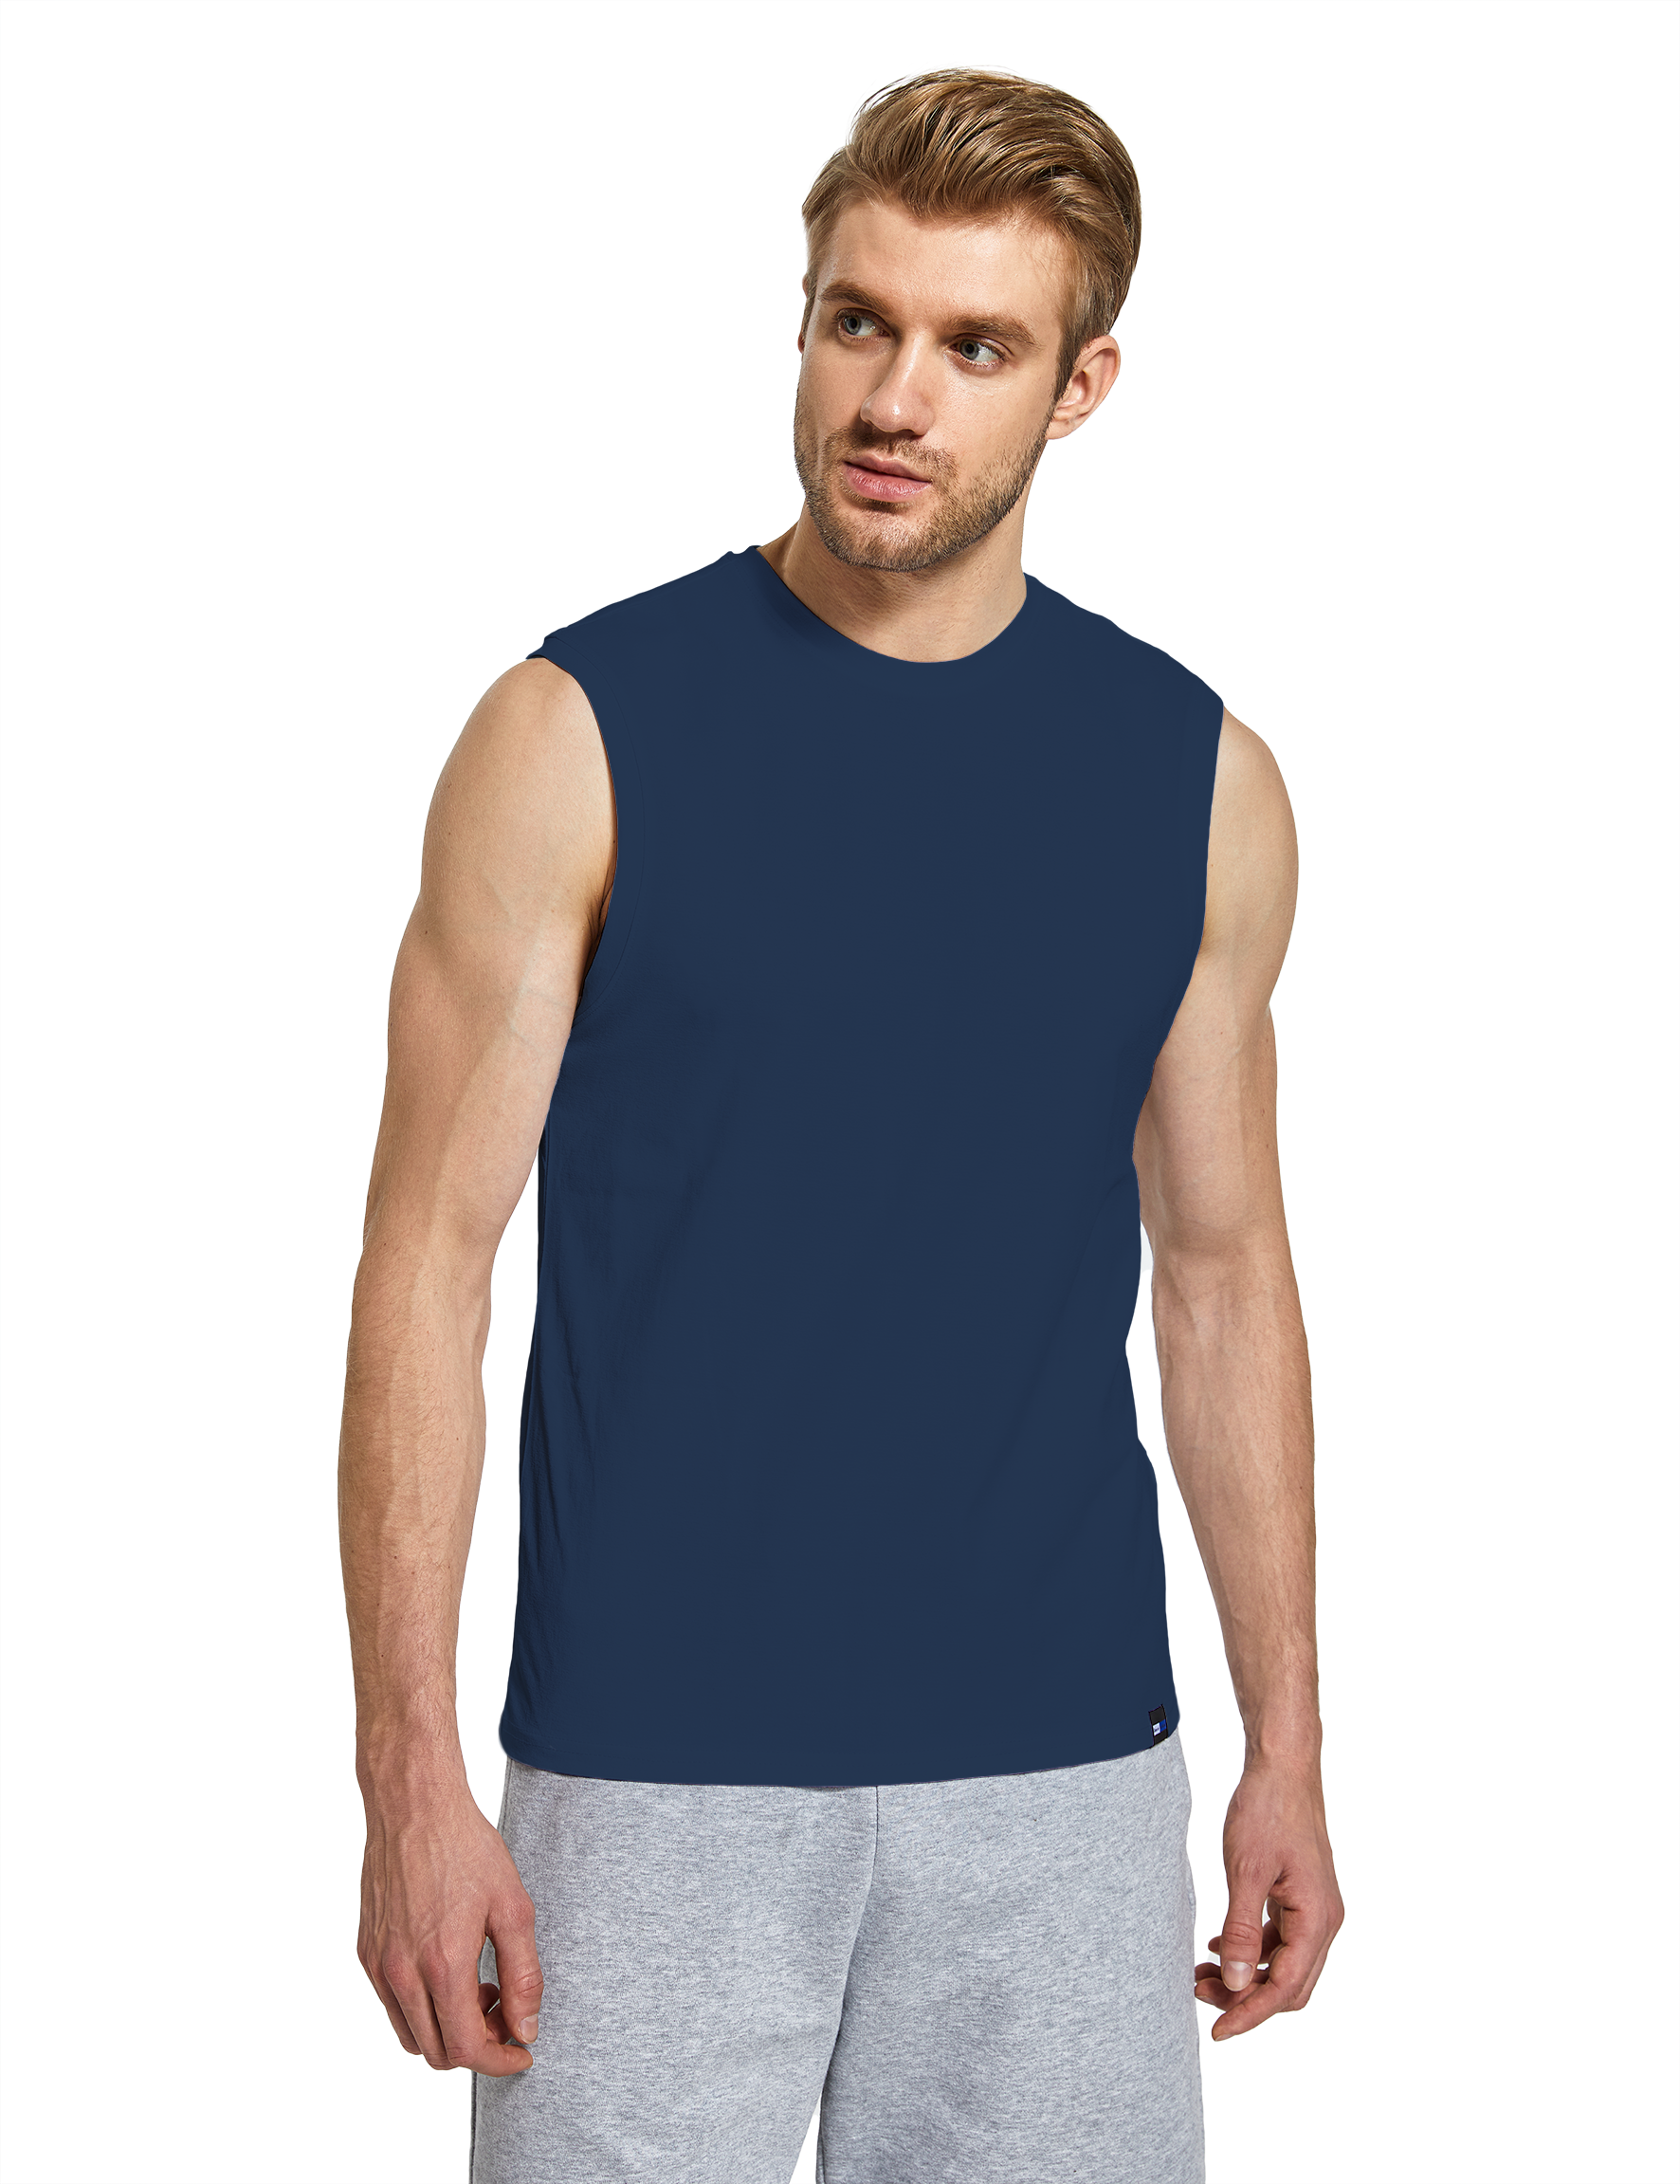 mens sleeveless shirts navy blue